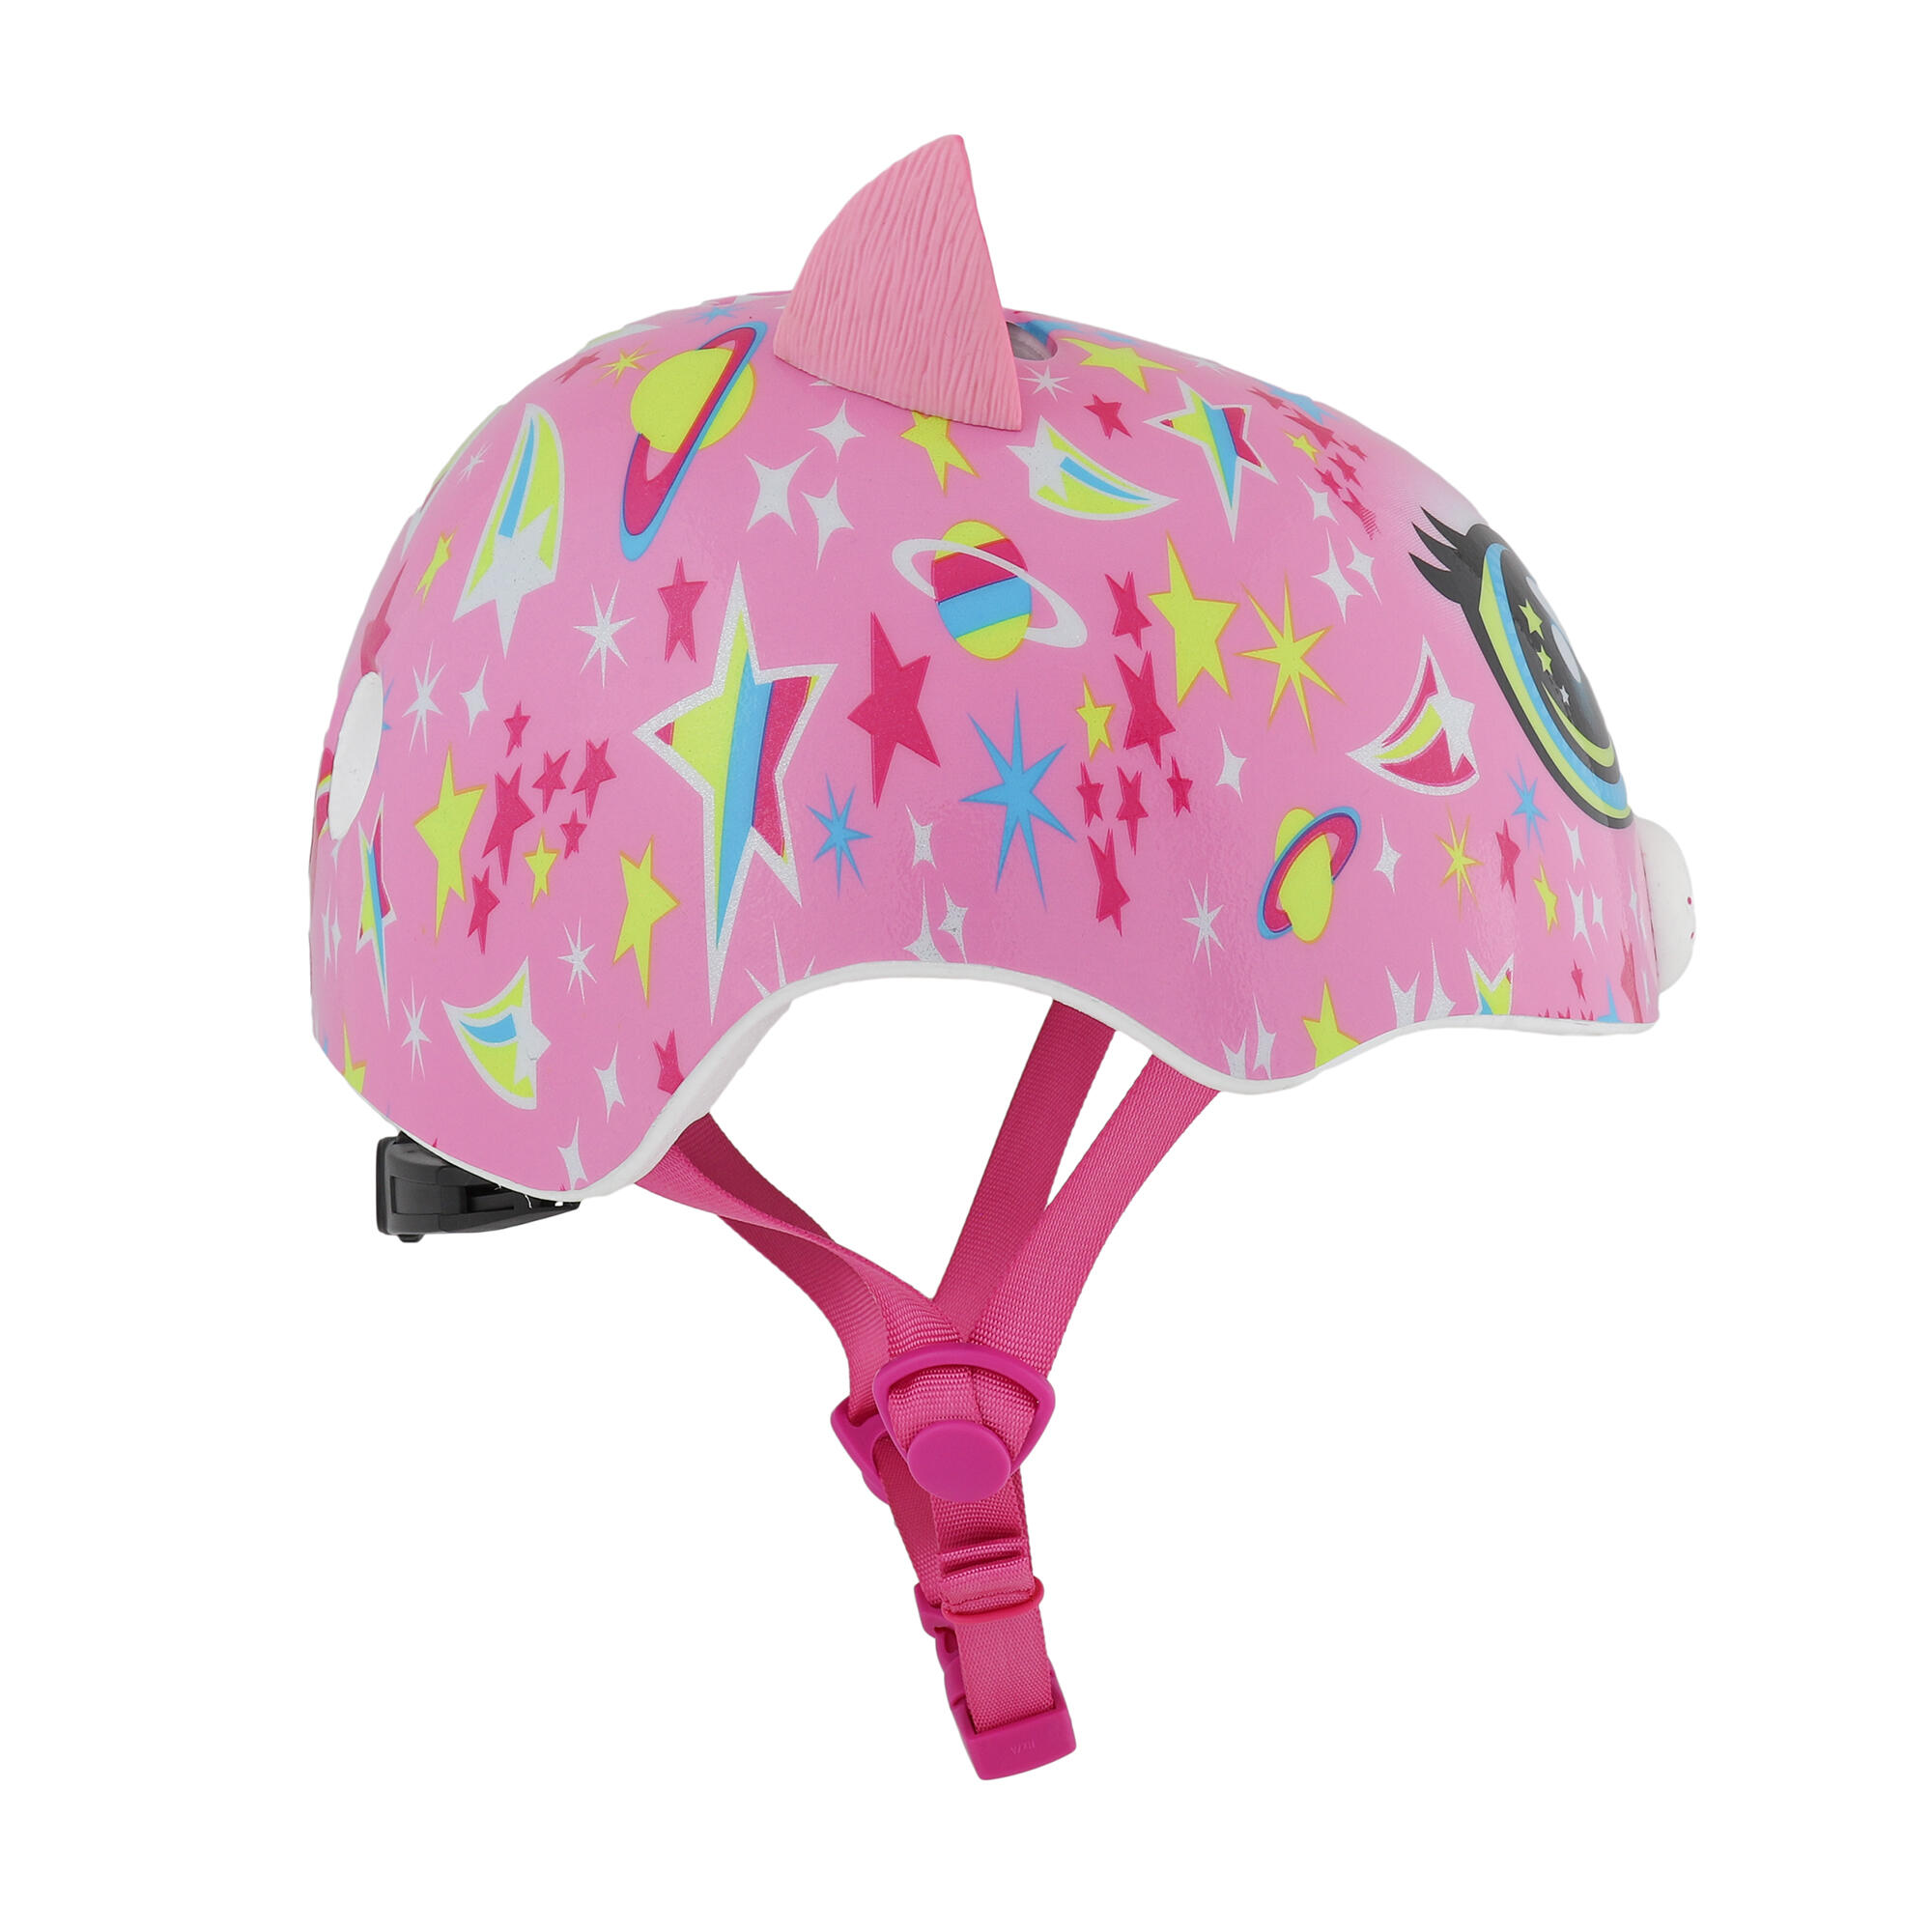 Raskullz FS Toddlers Helmet - Astro Cat Pink Astro Cat Pink Unisize 48-52cm 4/5